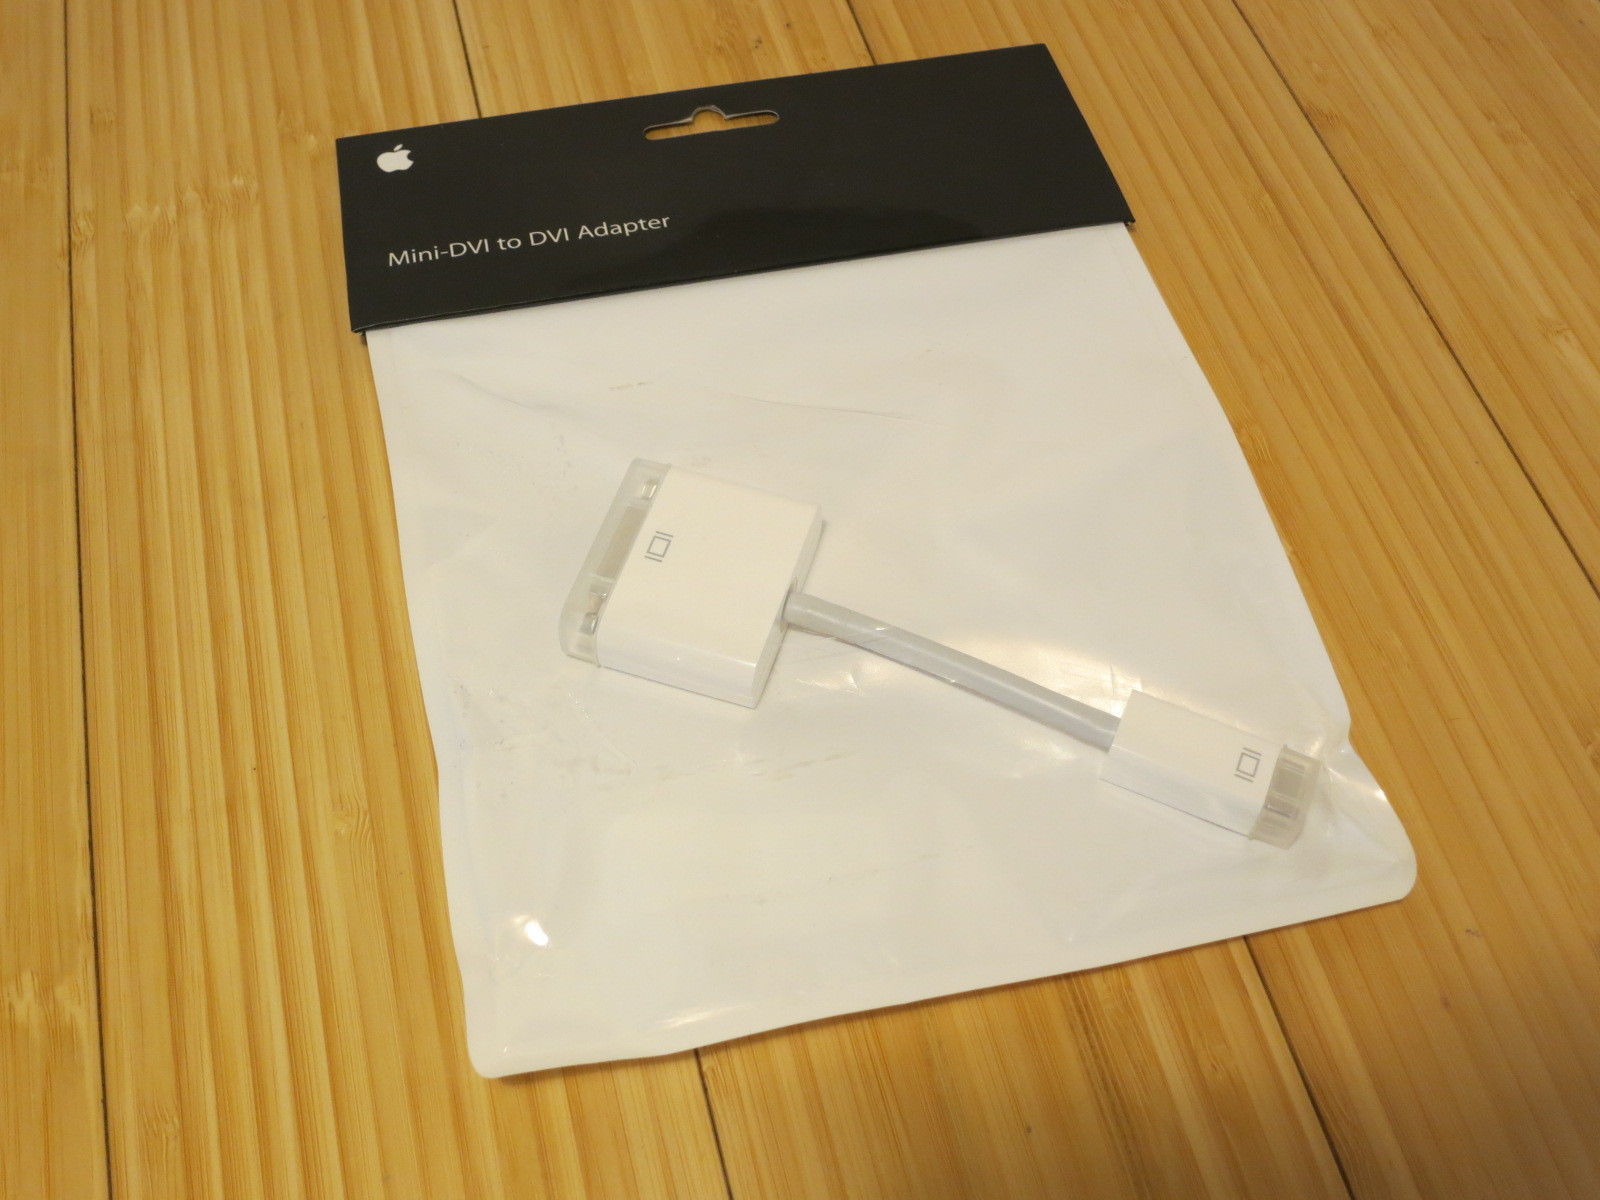 Brand New Apple Mini-DVI to DVI Adapter M9321G/B OEM Sealed Genuine Apple - $12.19